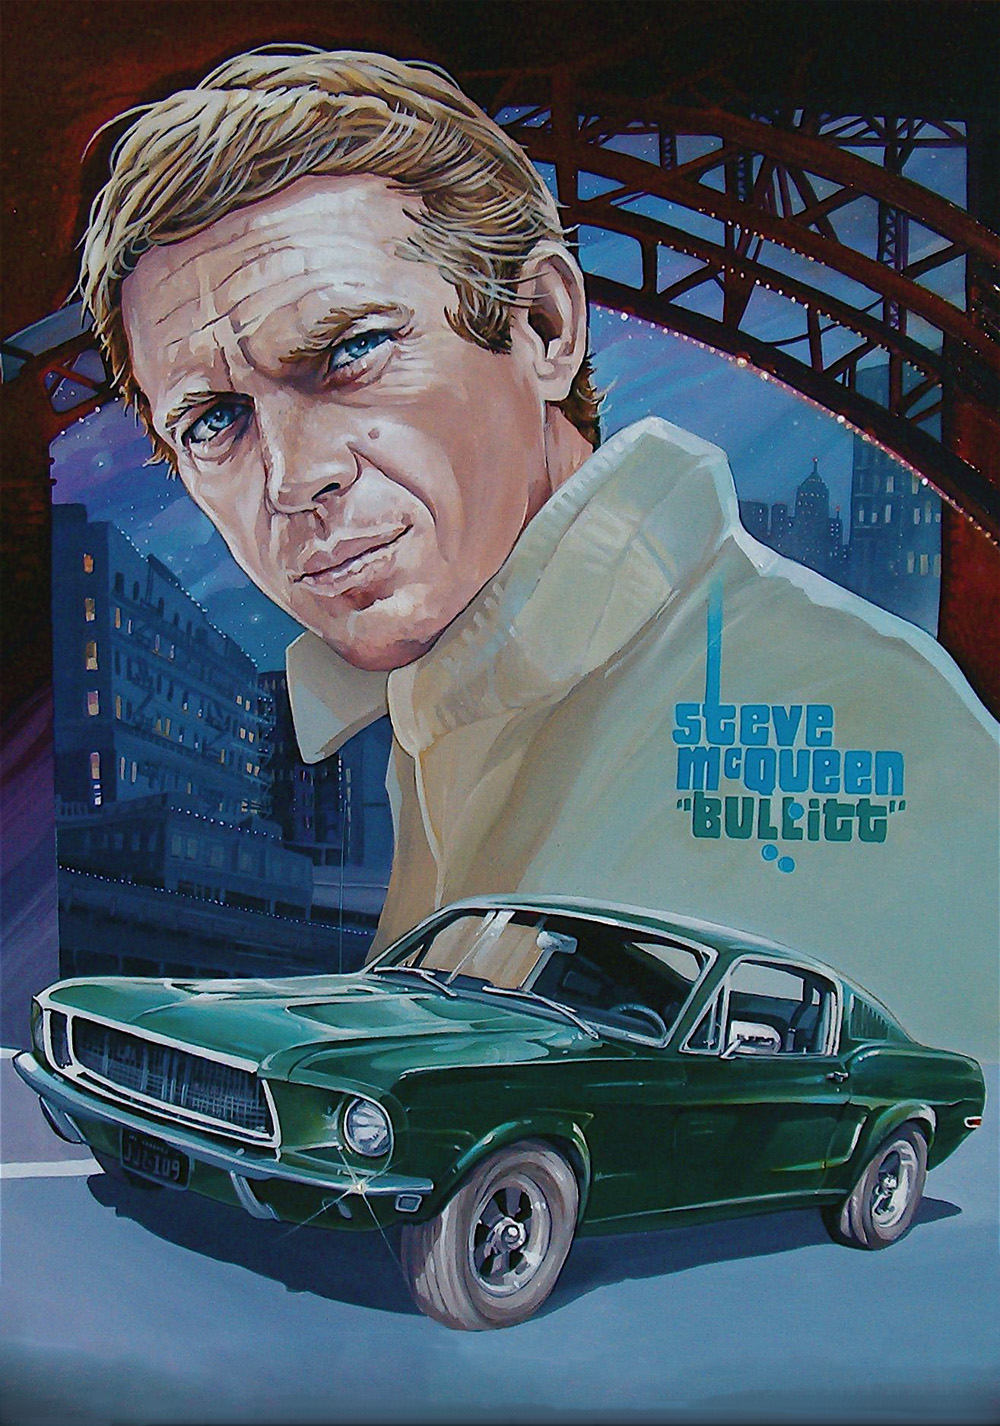 Frank Bullitt - Steve McQueen als Polizist in San Francisco